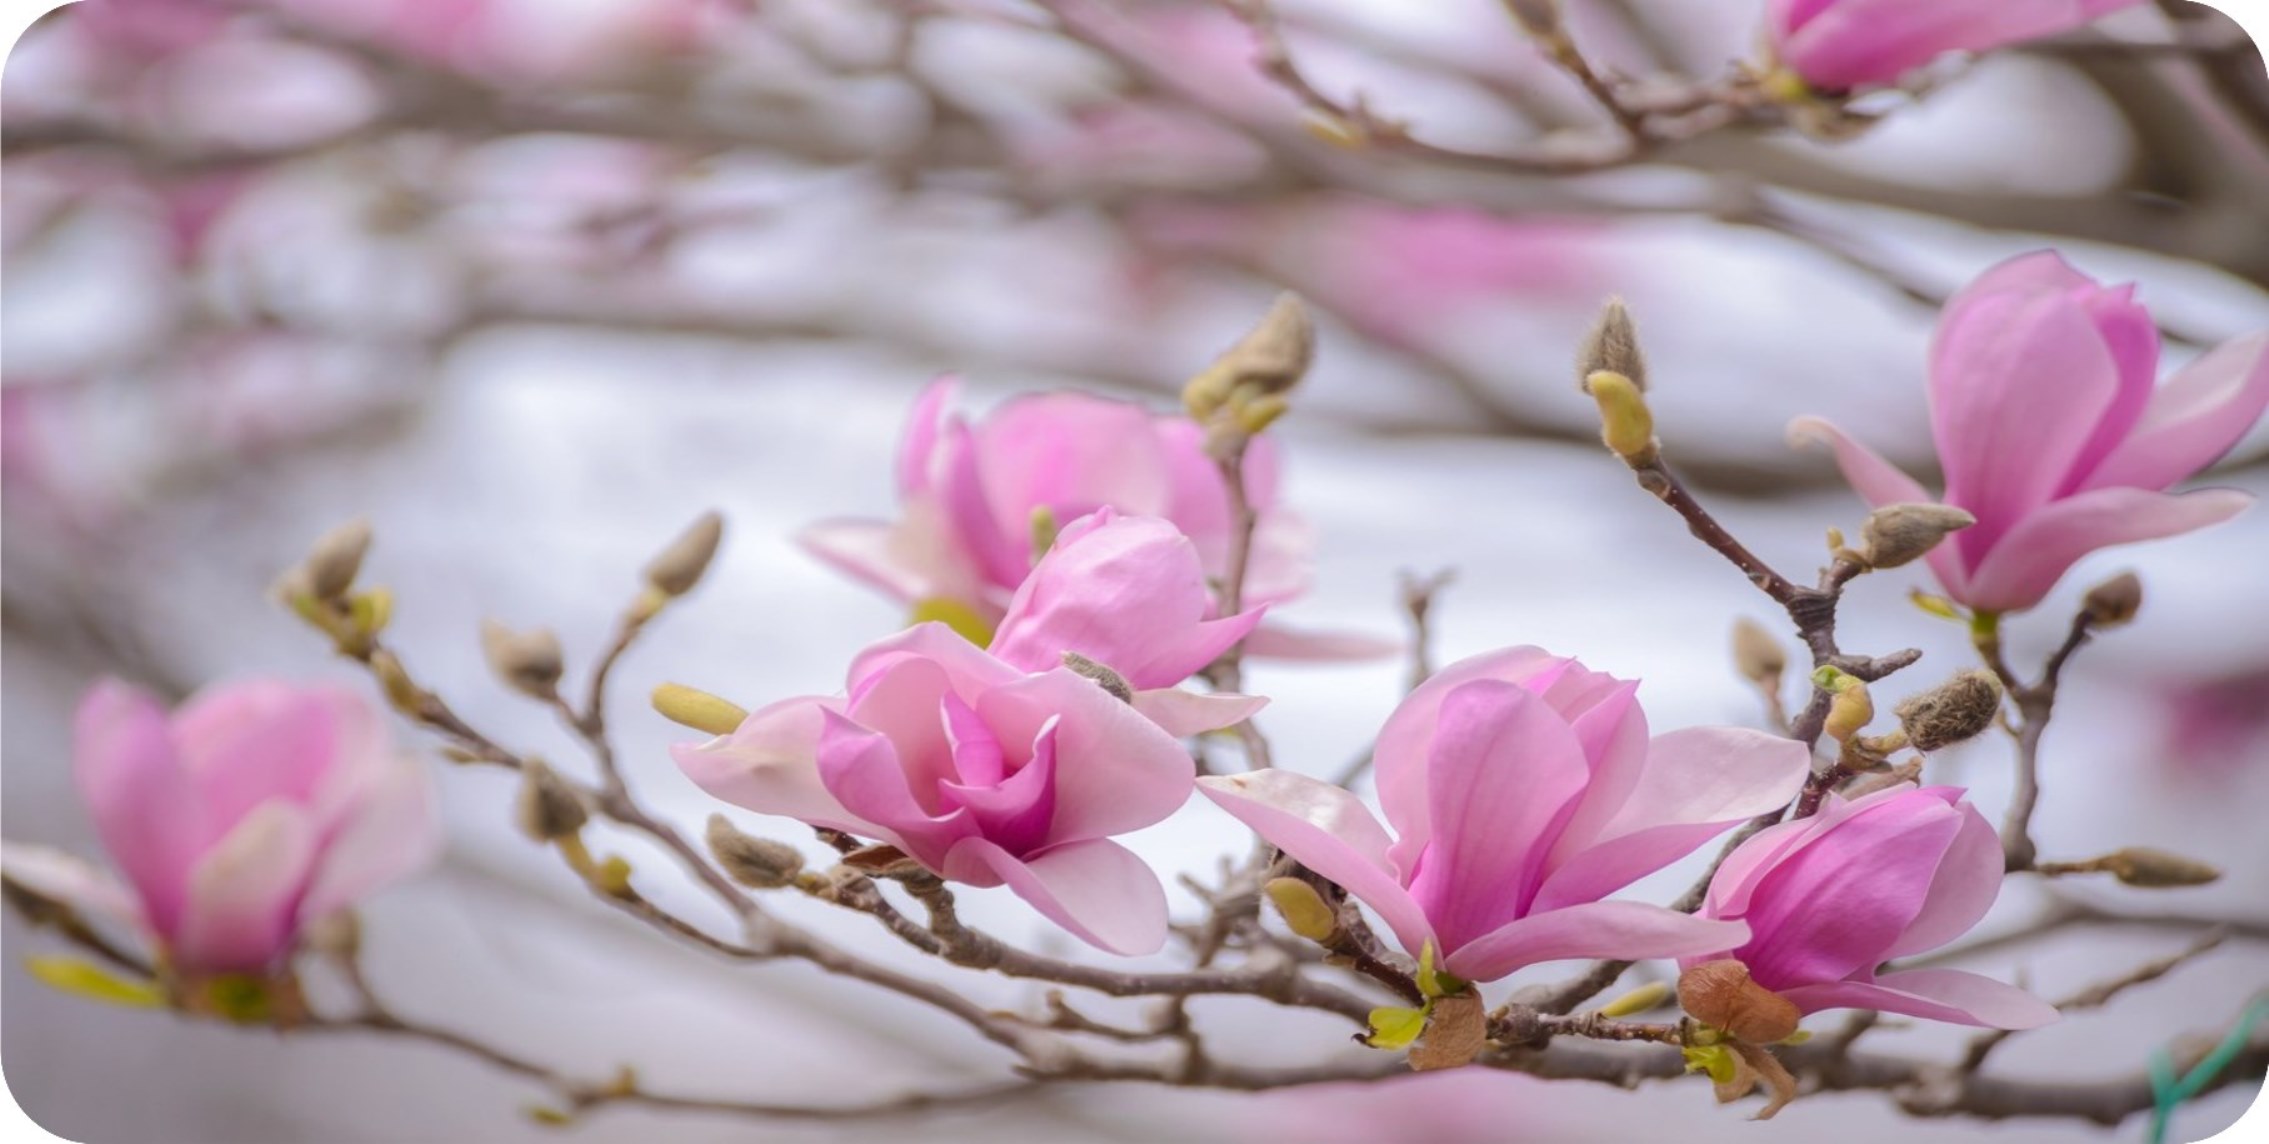 Magnolia FLOWERS Photo License Plate